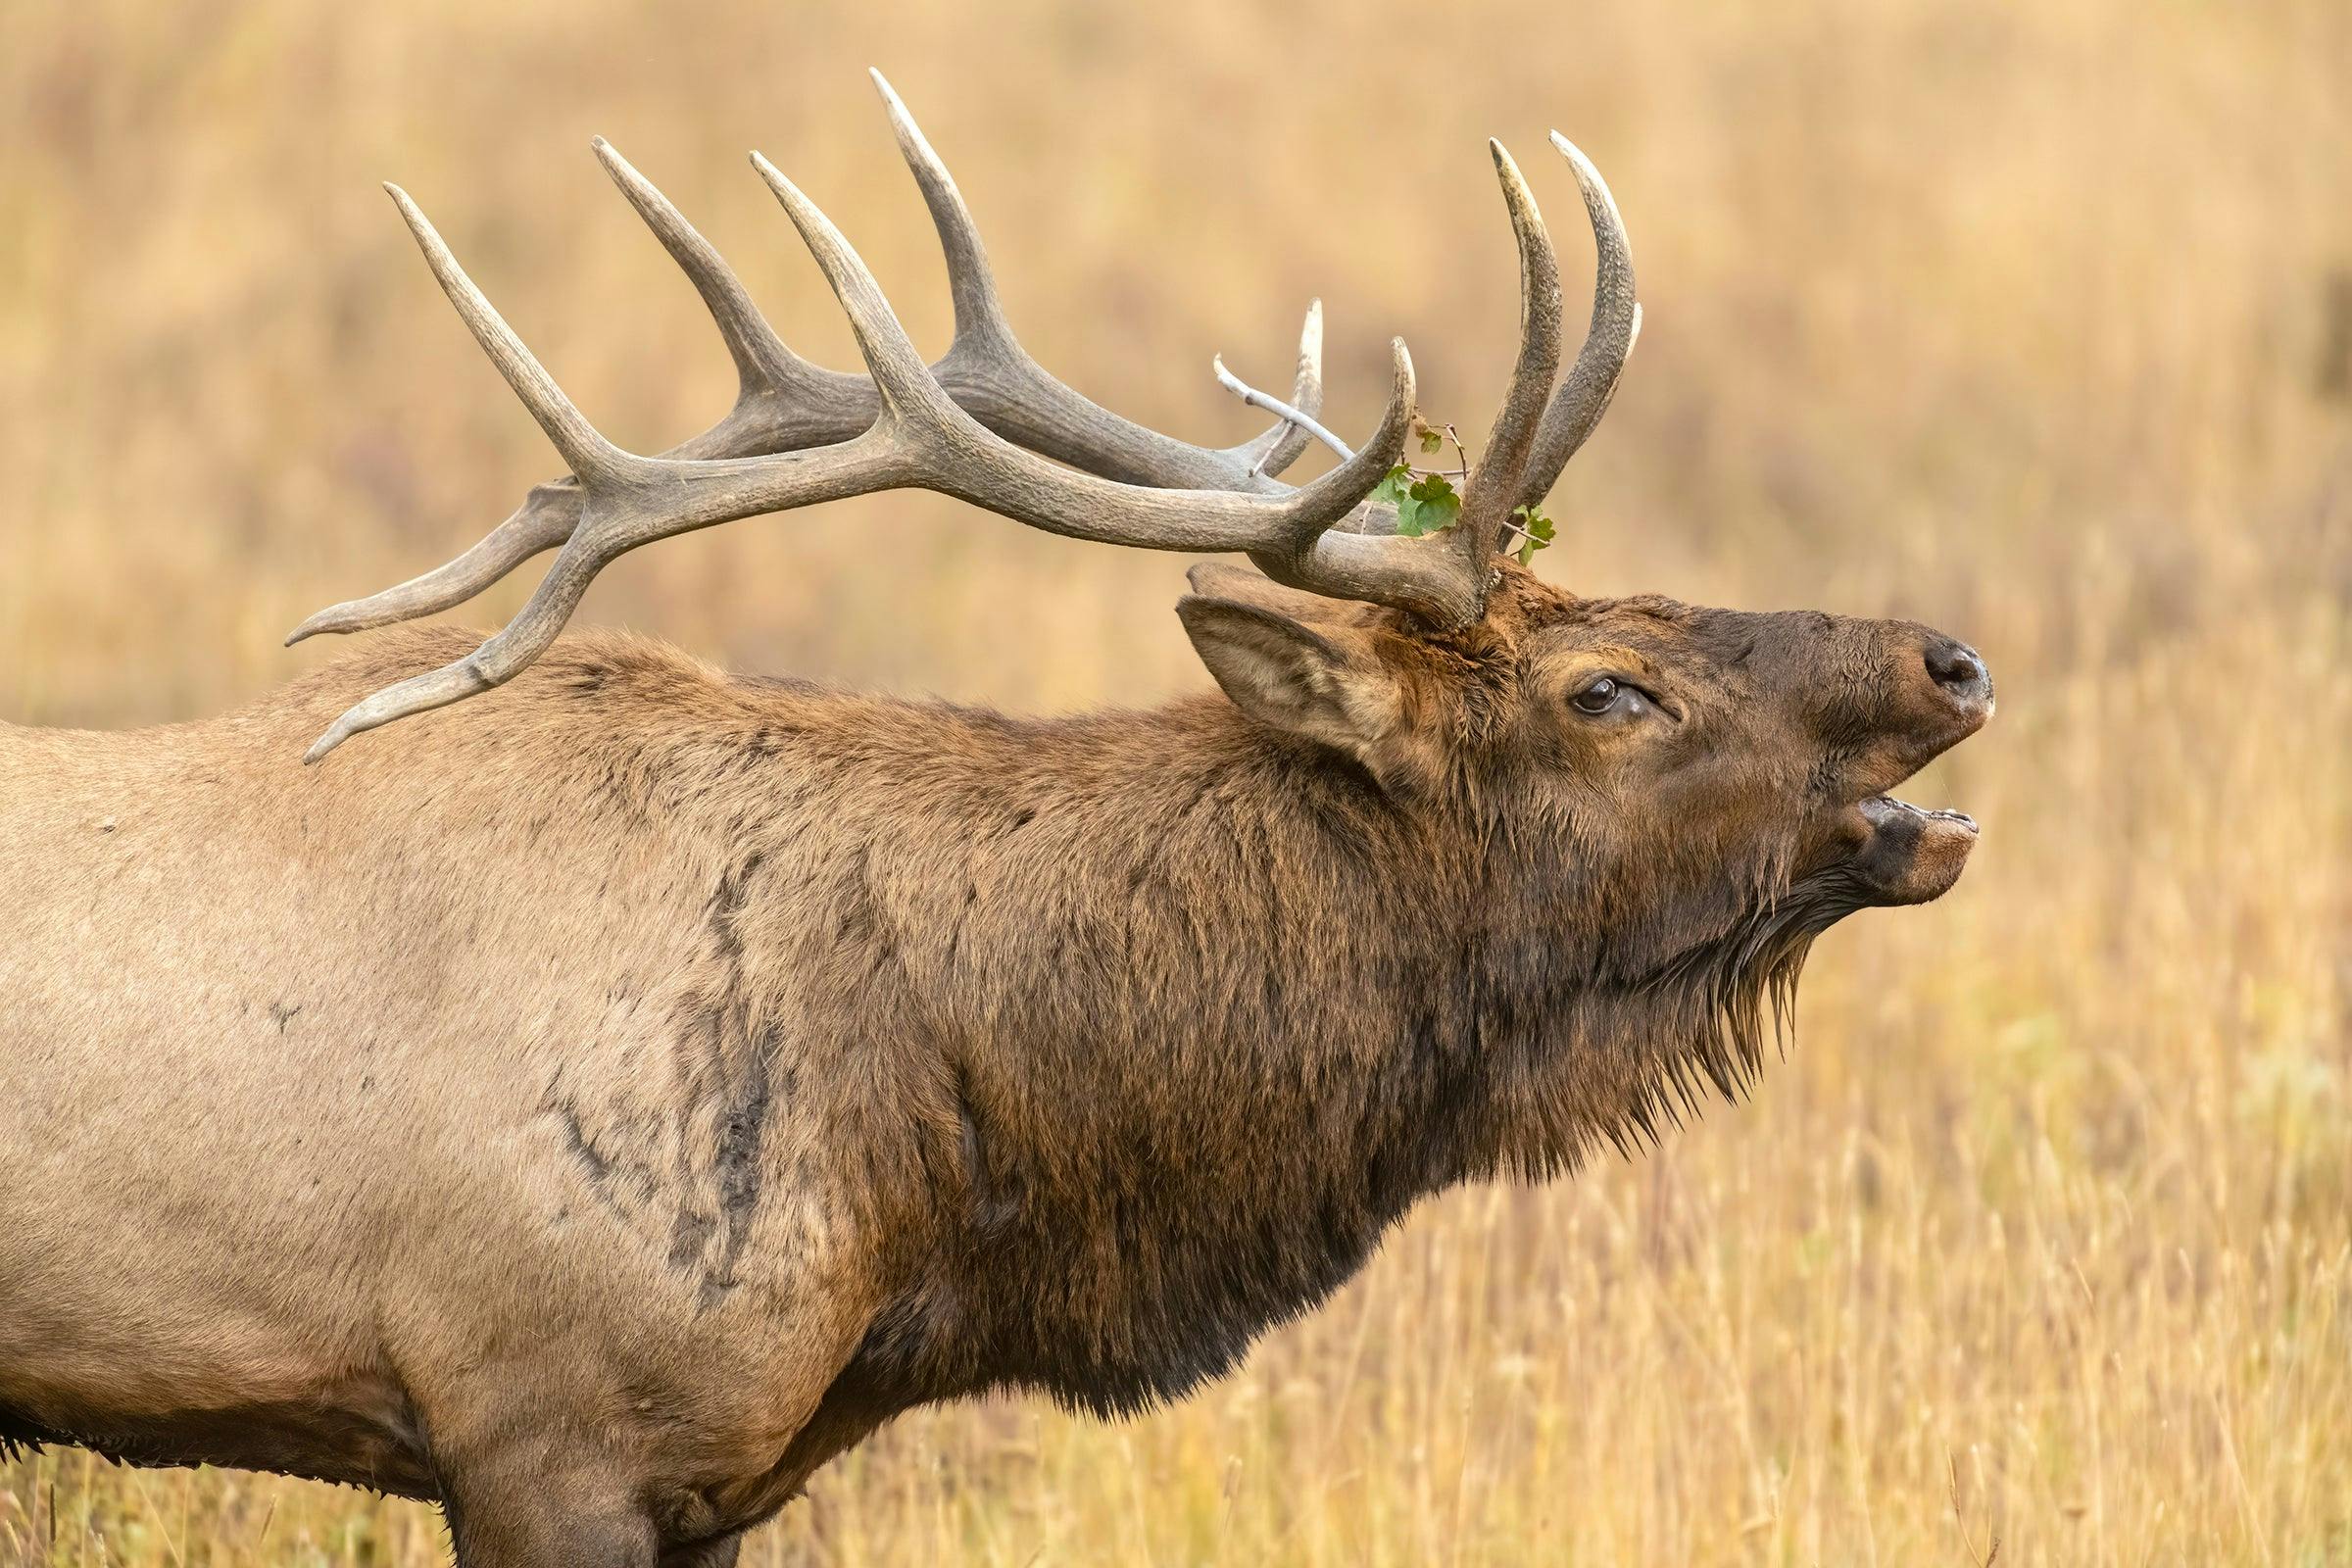 National Park Nature Walks, Episode 10: The Otherworldly Sounds of an Elk Rut